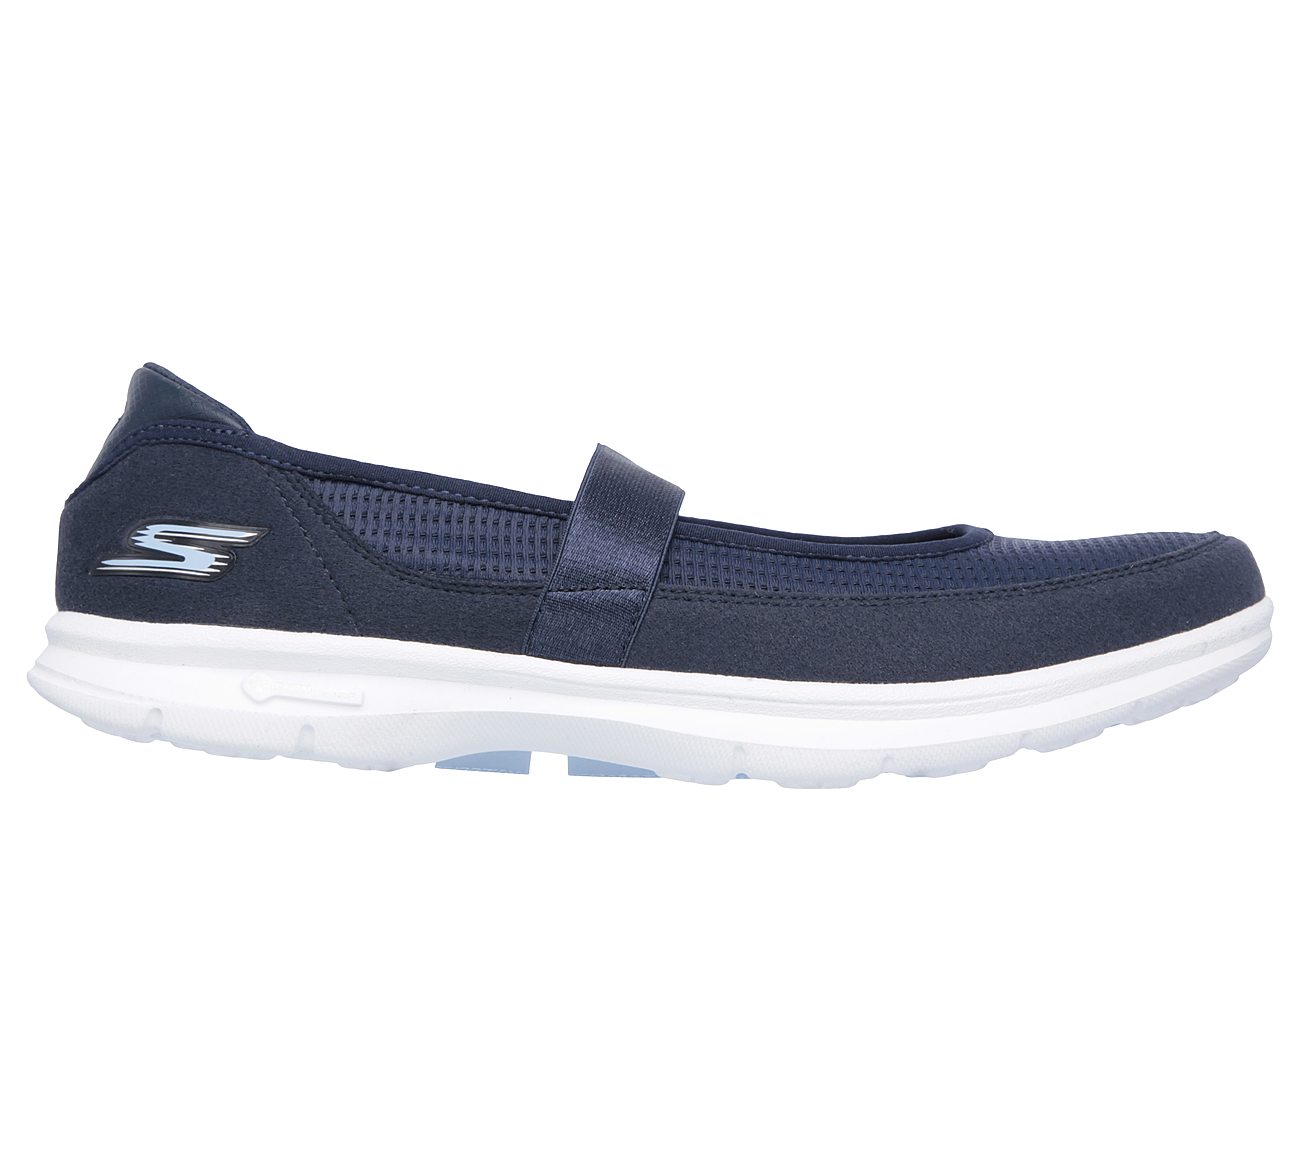 Buy SKECHERS Skechers GO STEP - Original Comfort Shoes Shoes only $69.00